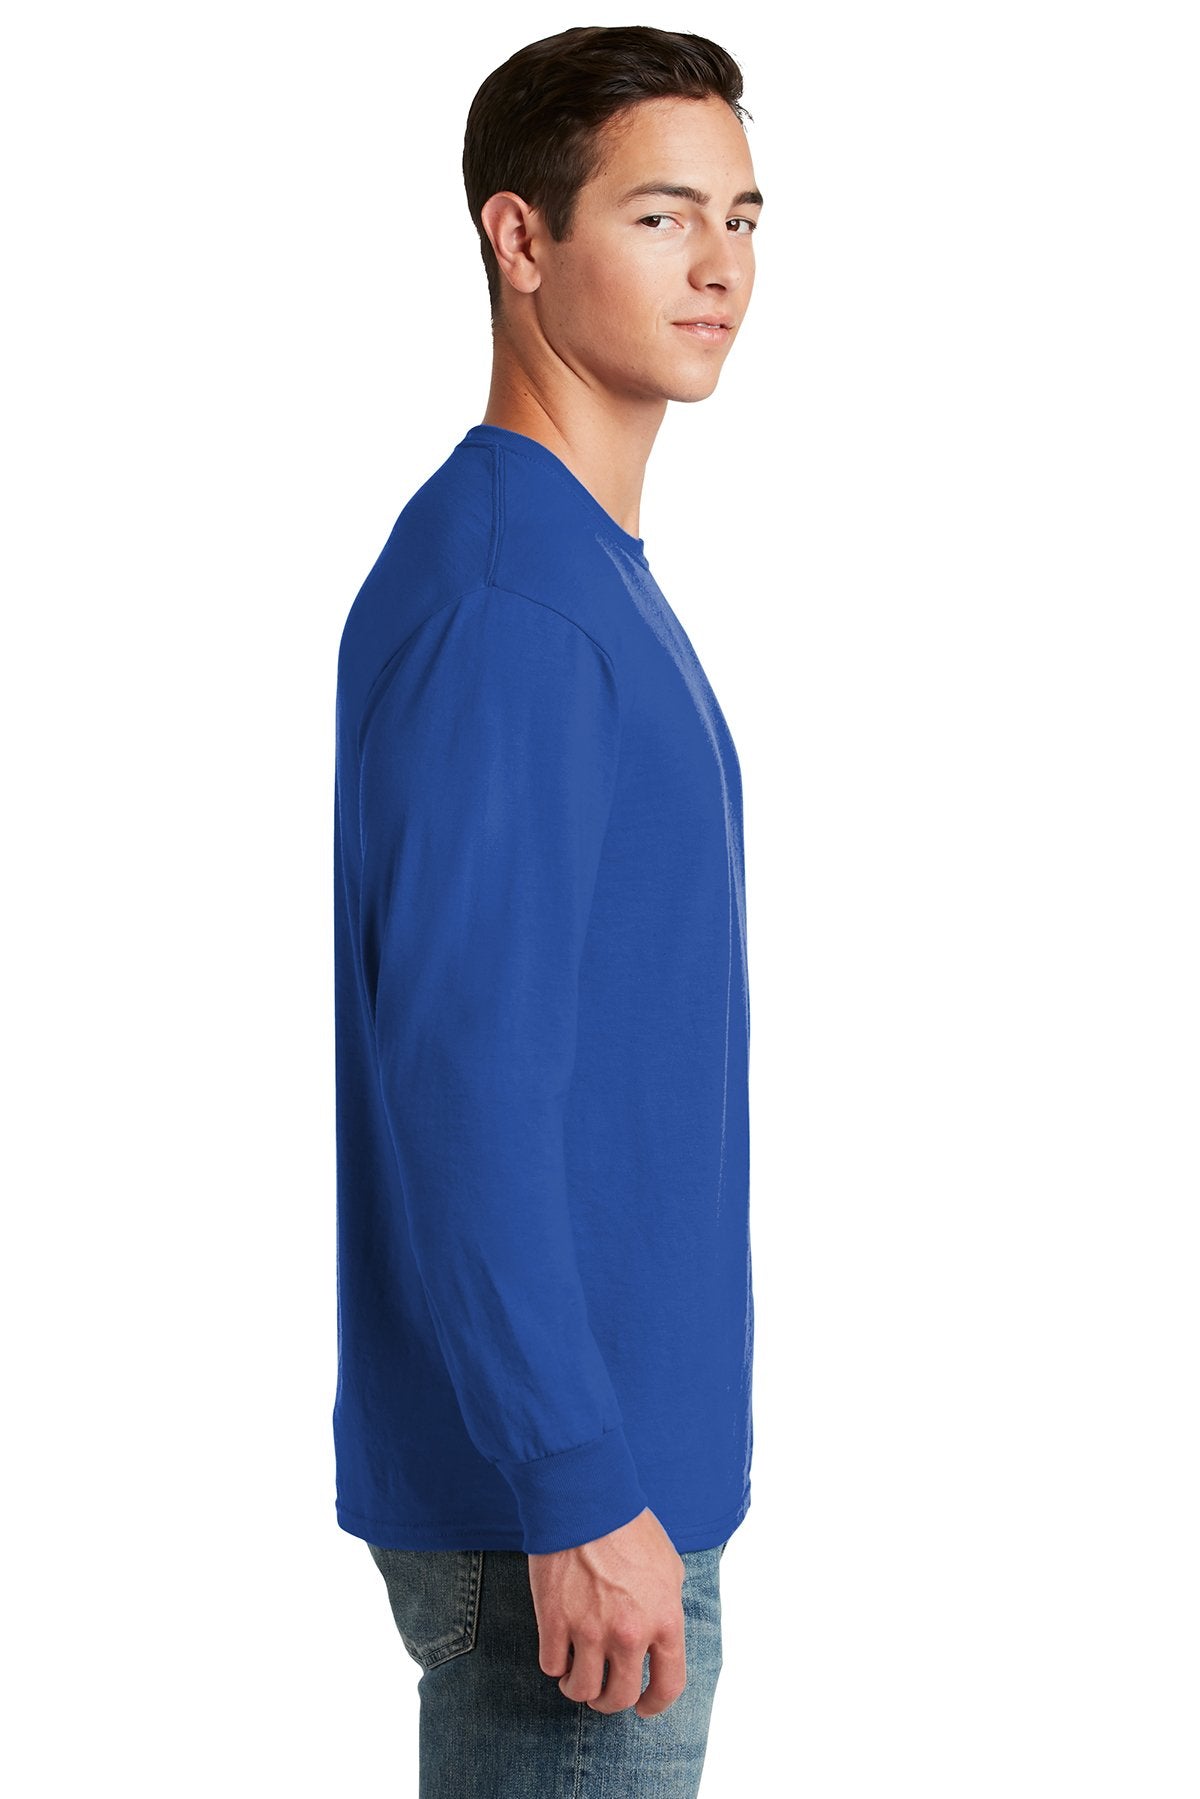 Jerzees Dri-Power 50/50 Cotton/Poly Long Sleeve T-Shirt 29LS Royal